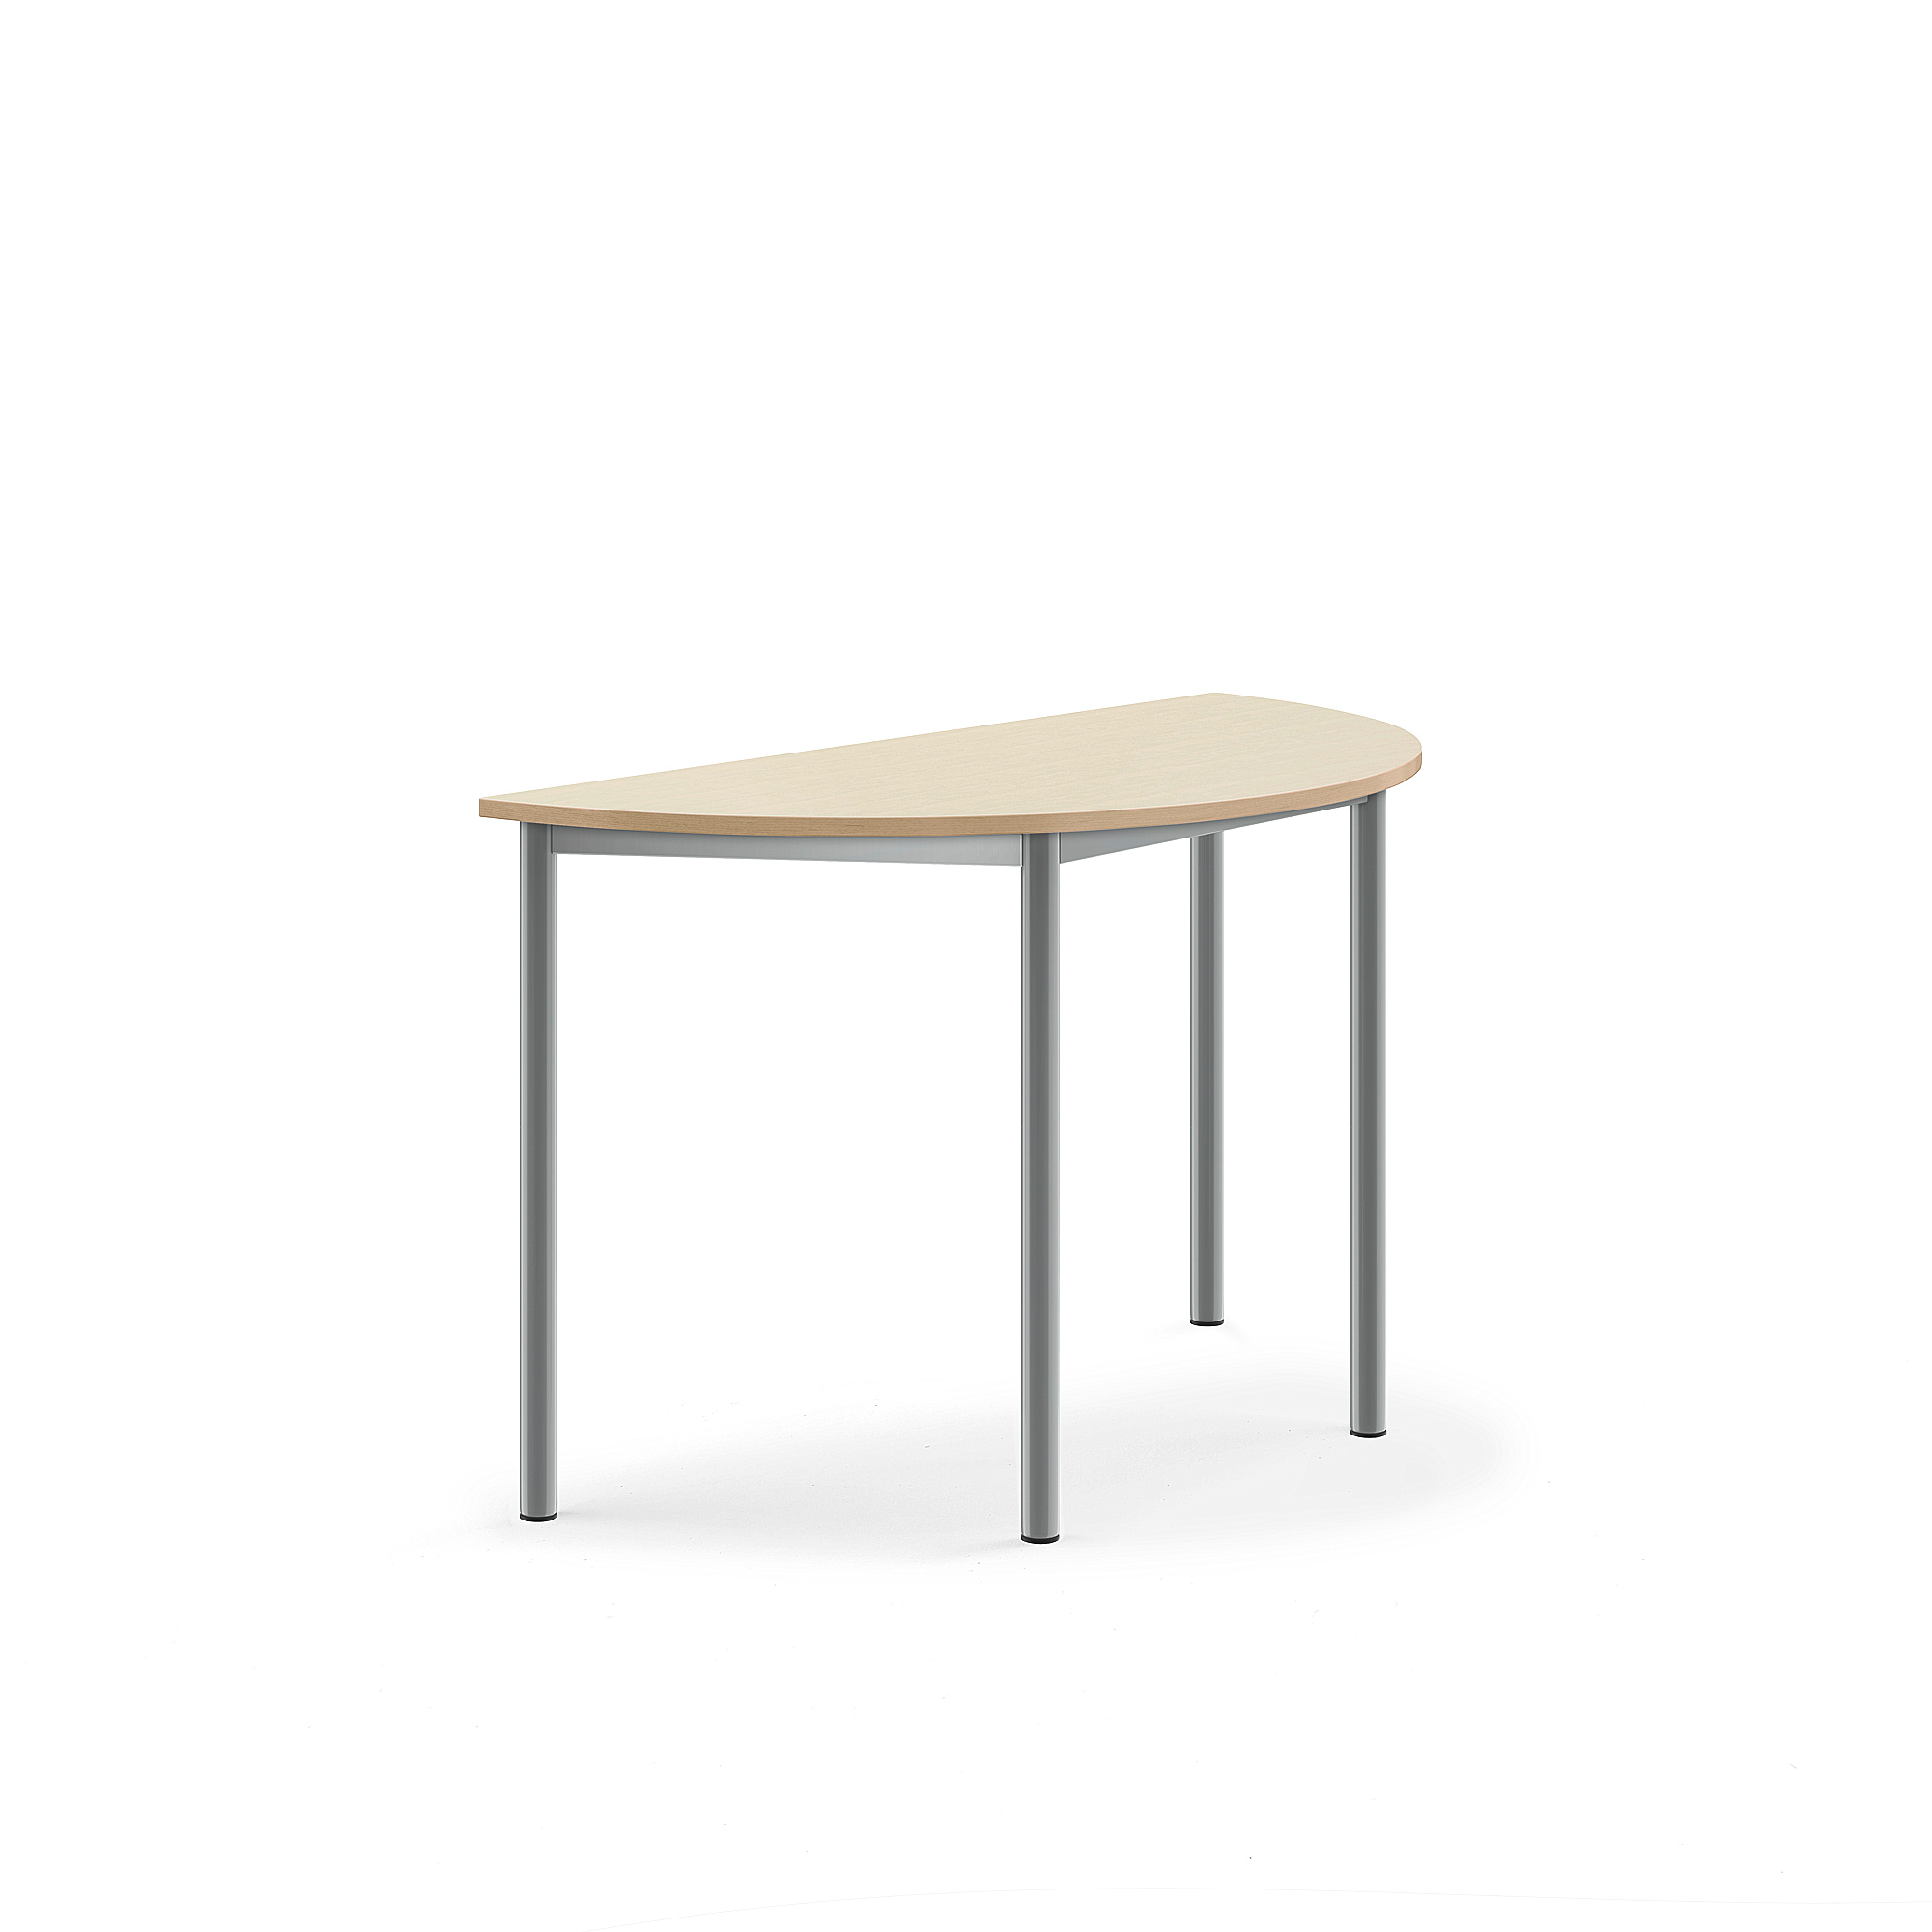 Stůl SONITUS, půlkruh, 1200x600x720 mm, stříbrné nohy, HPL deska tlumící hluk, bříza